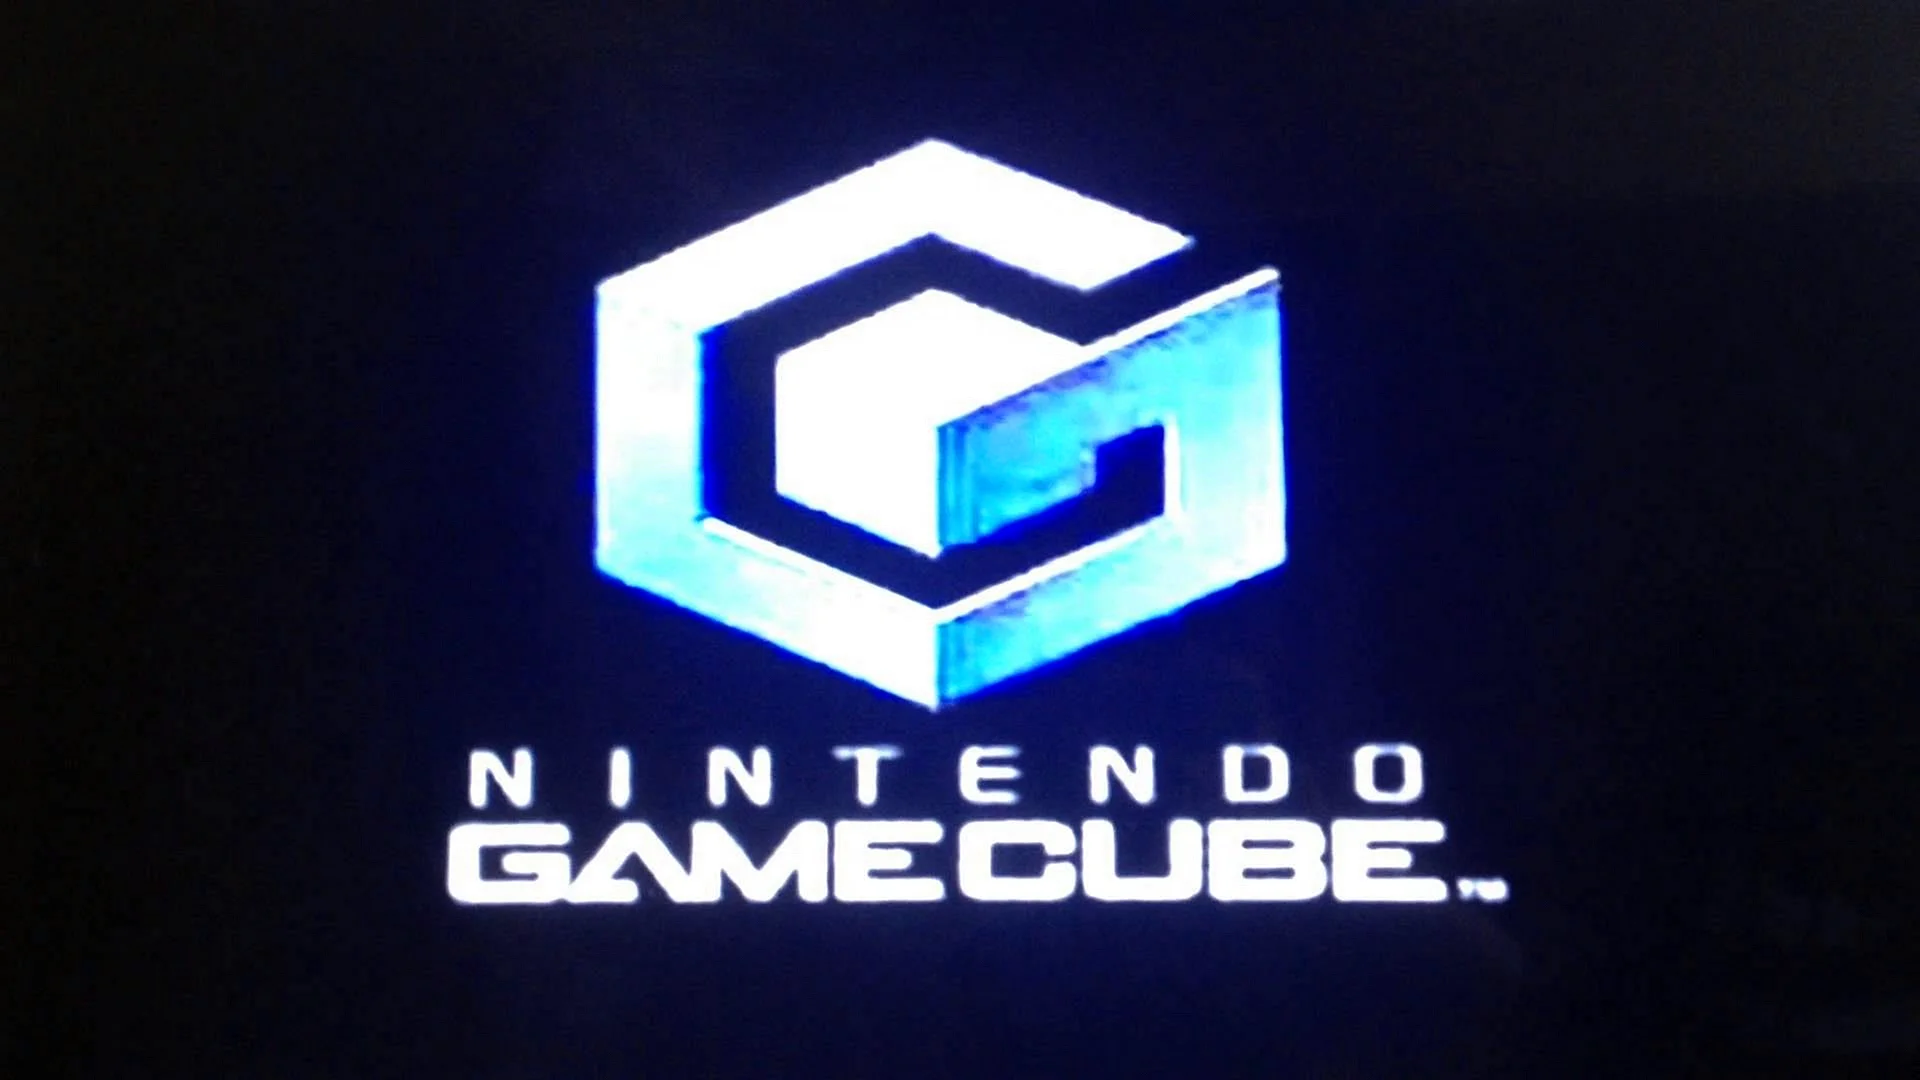 Gamecube Logo Wallpaper